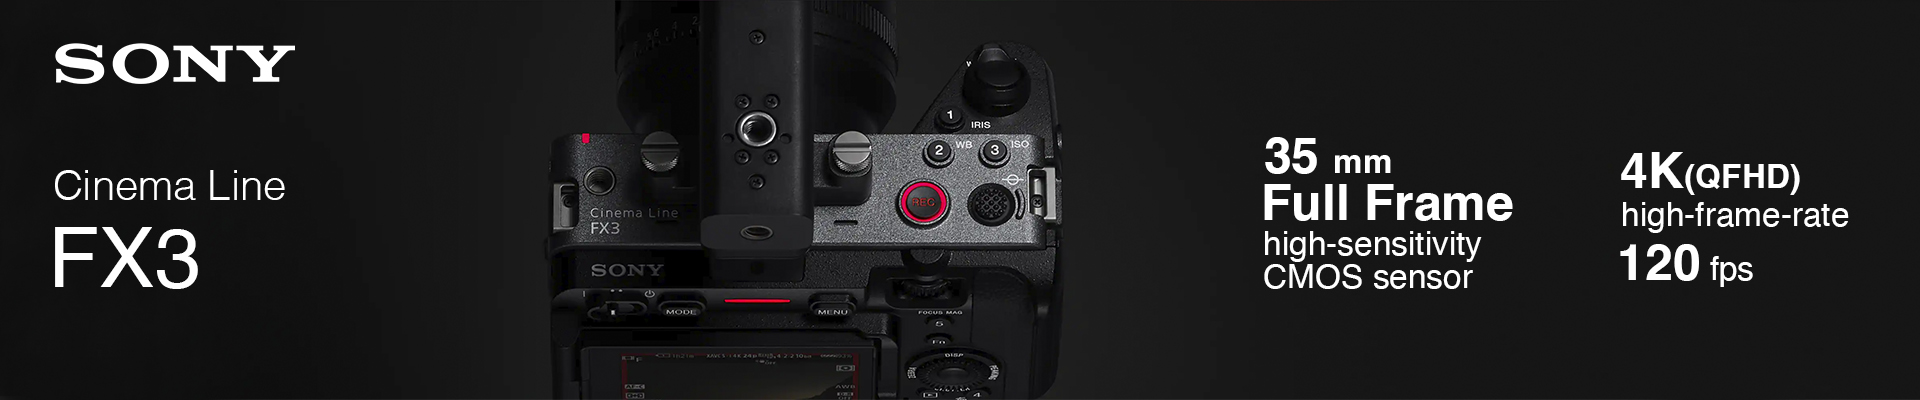 Беззеркальная камера Sony FX3 